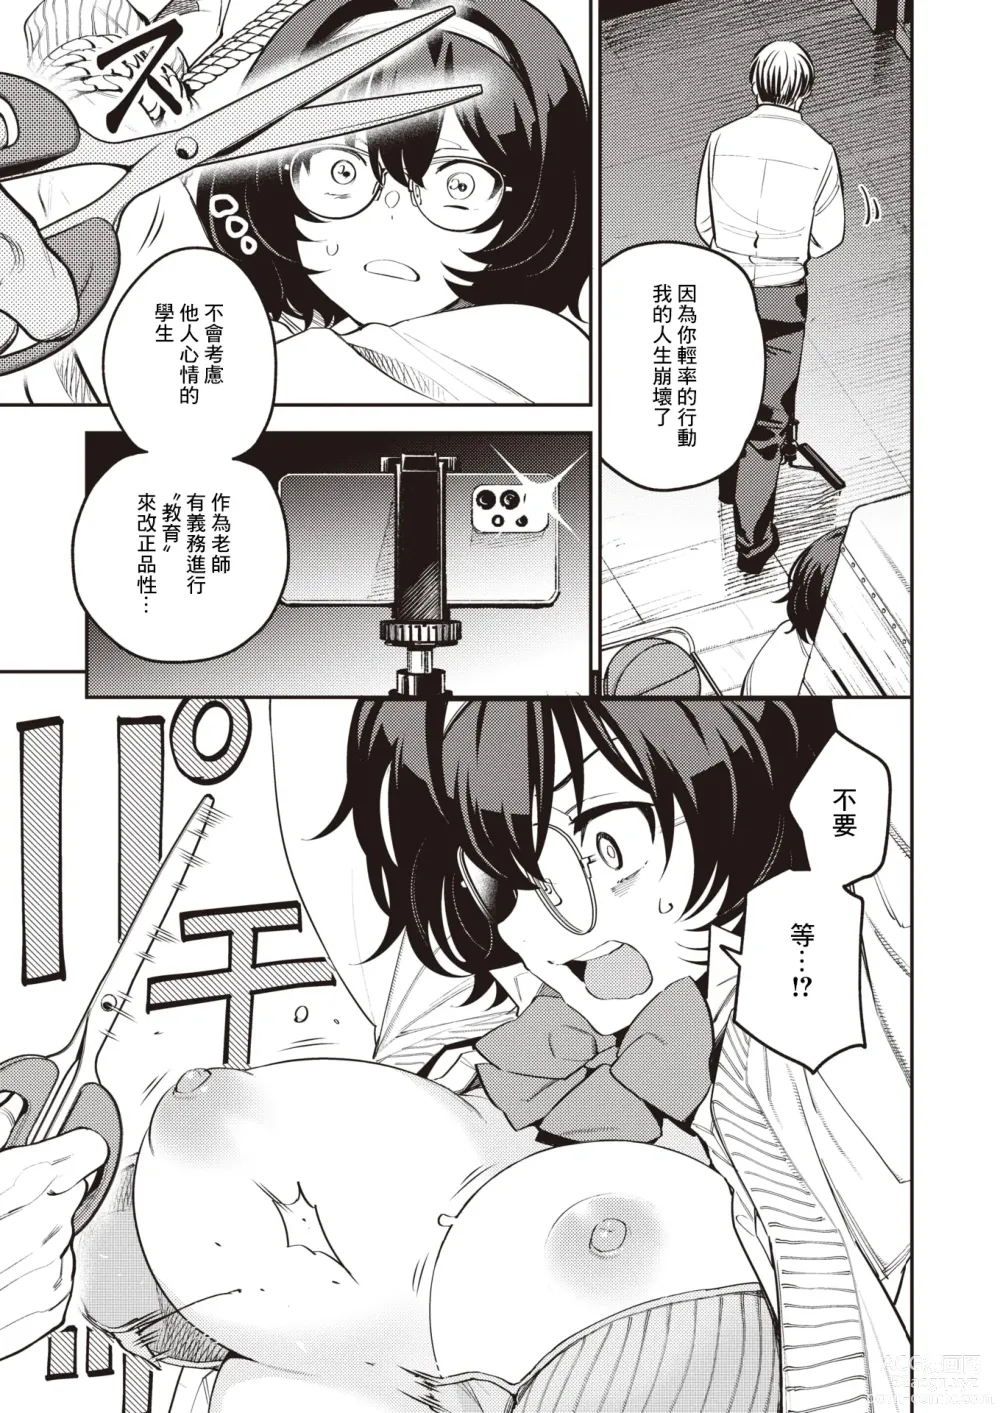 Page 7 of manga Wakarase Filming